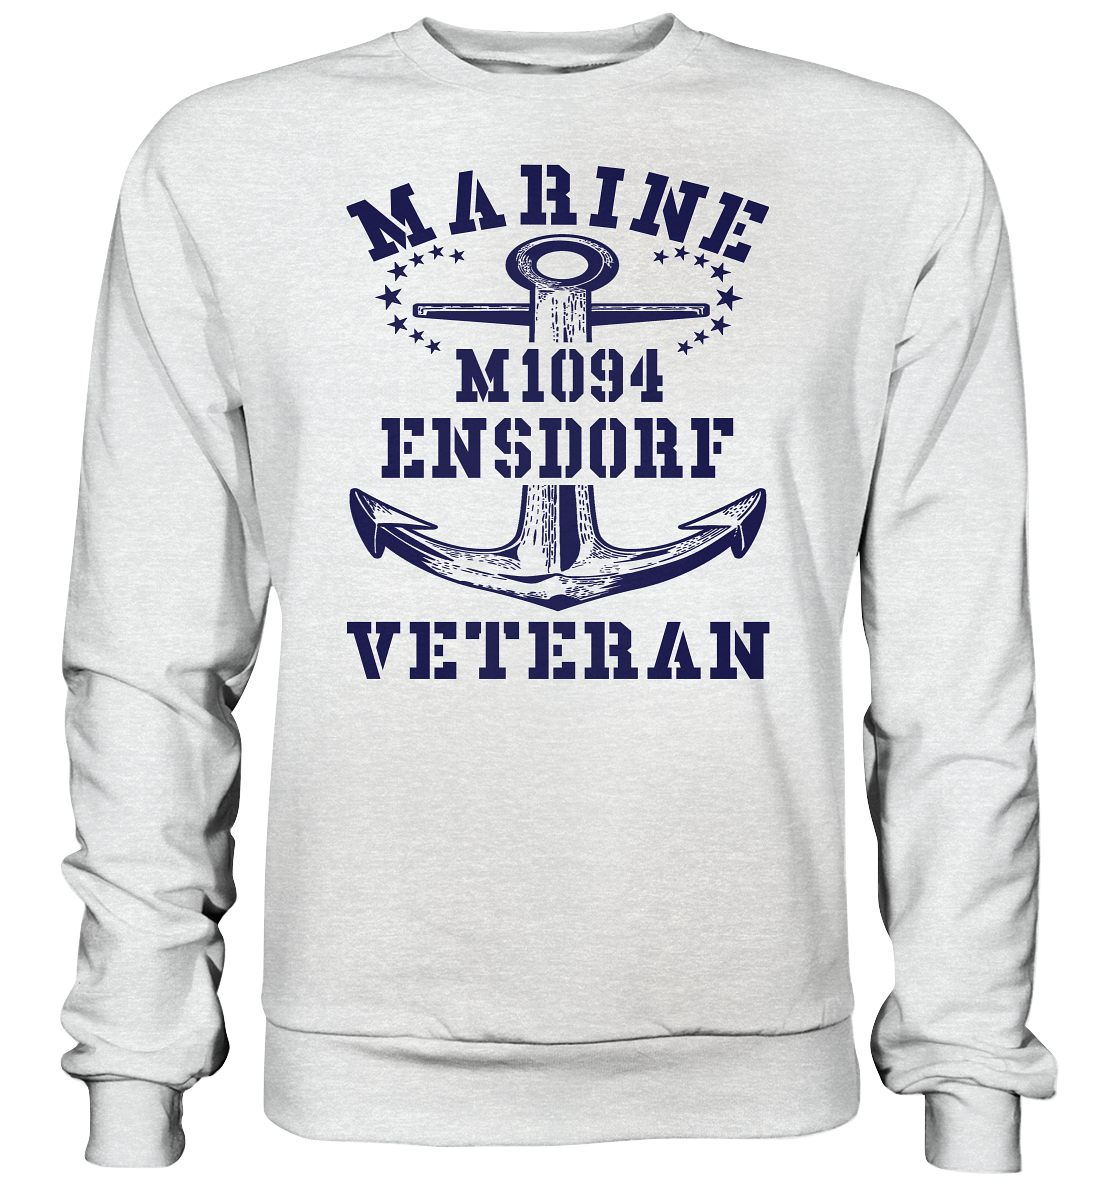 M1094 ENSDORF Marine Veteran - Premium Sweatshirt